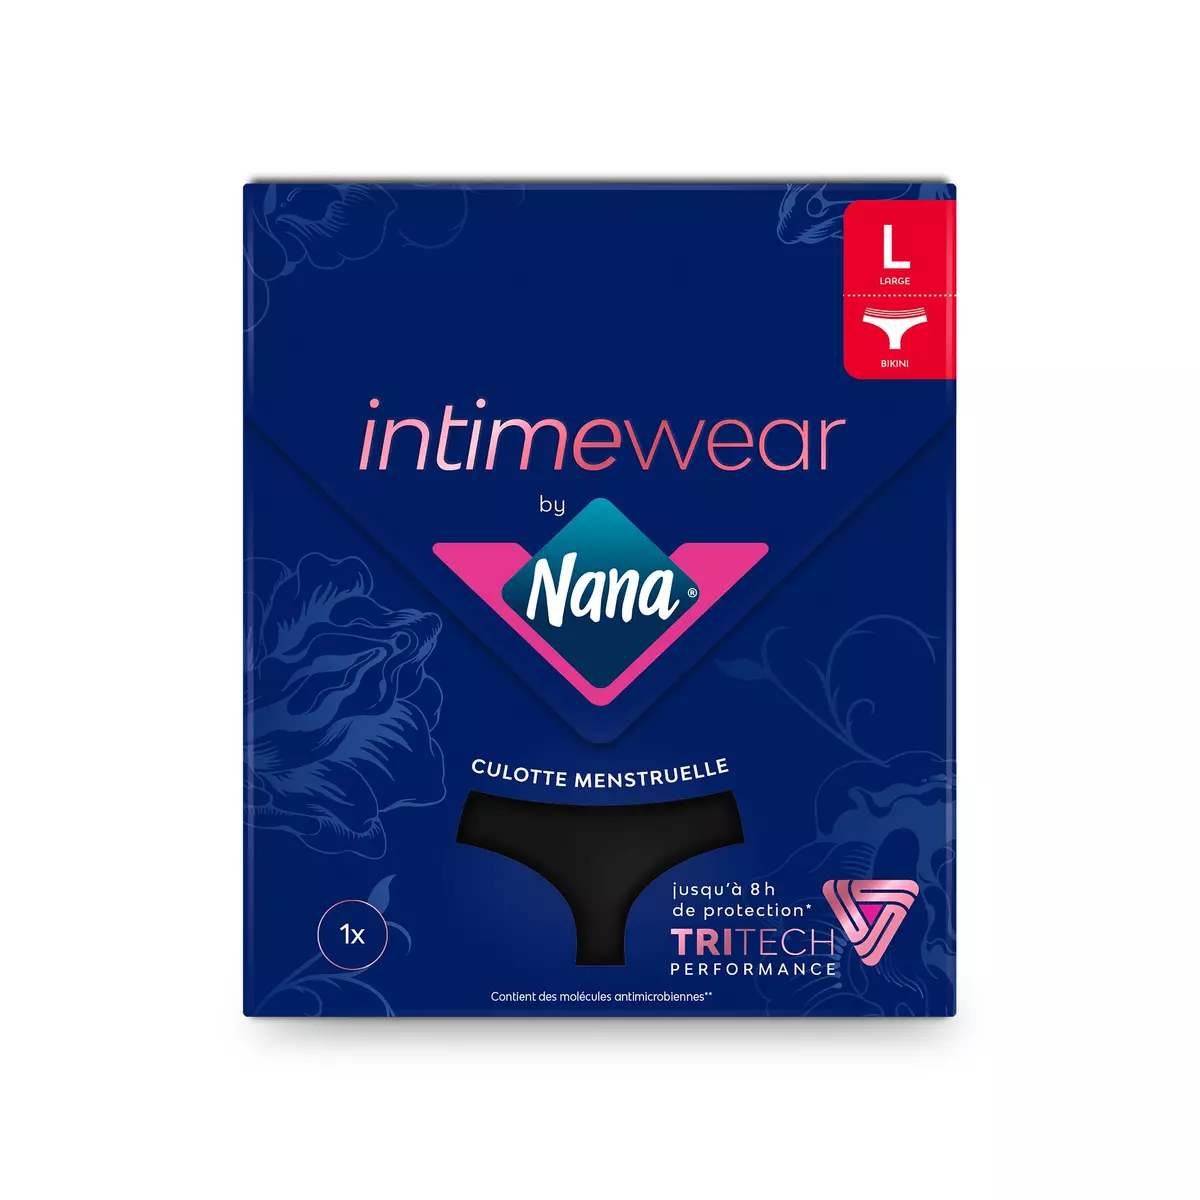 NANA Intime wear Culotte menstruelle bikini taille L 1 pièce